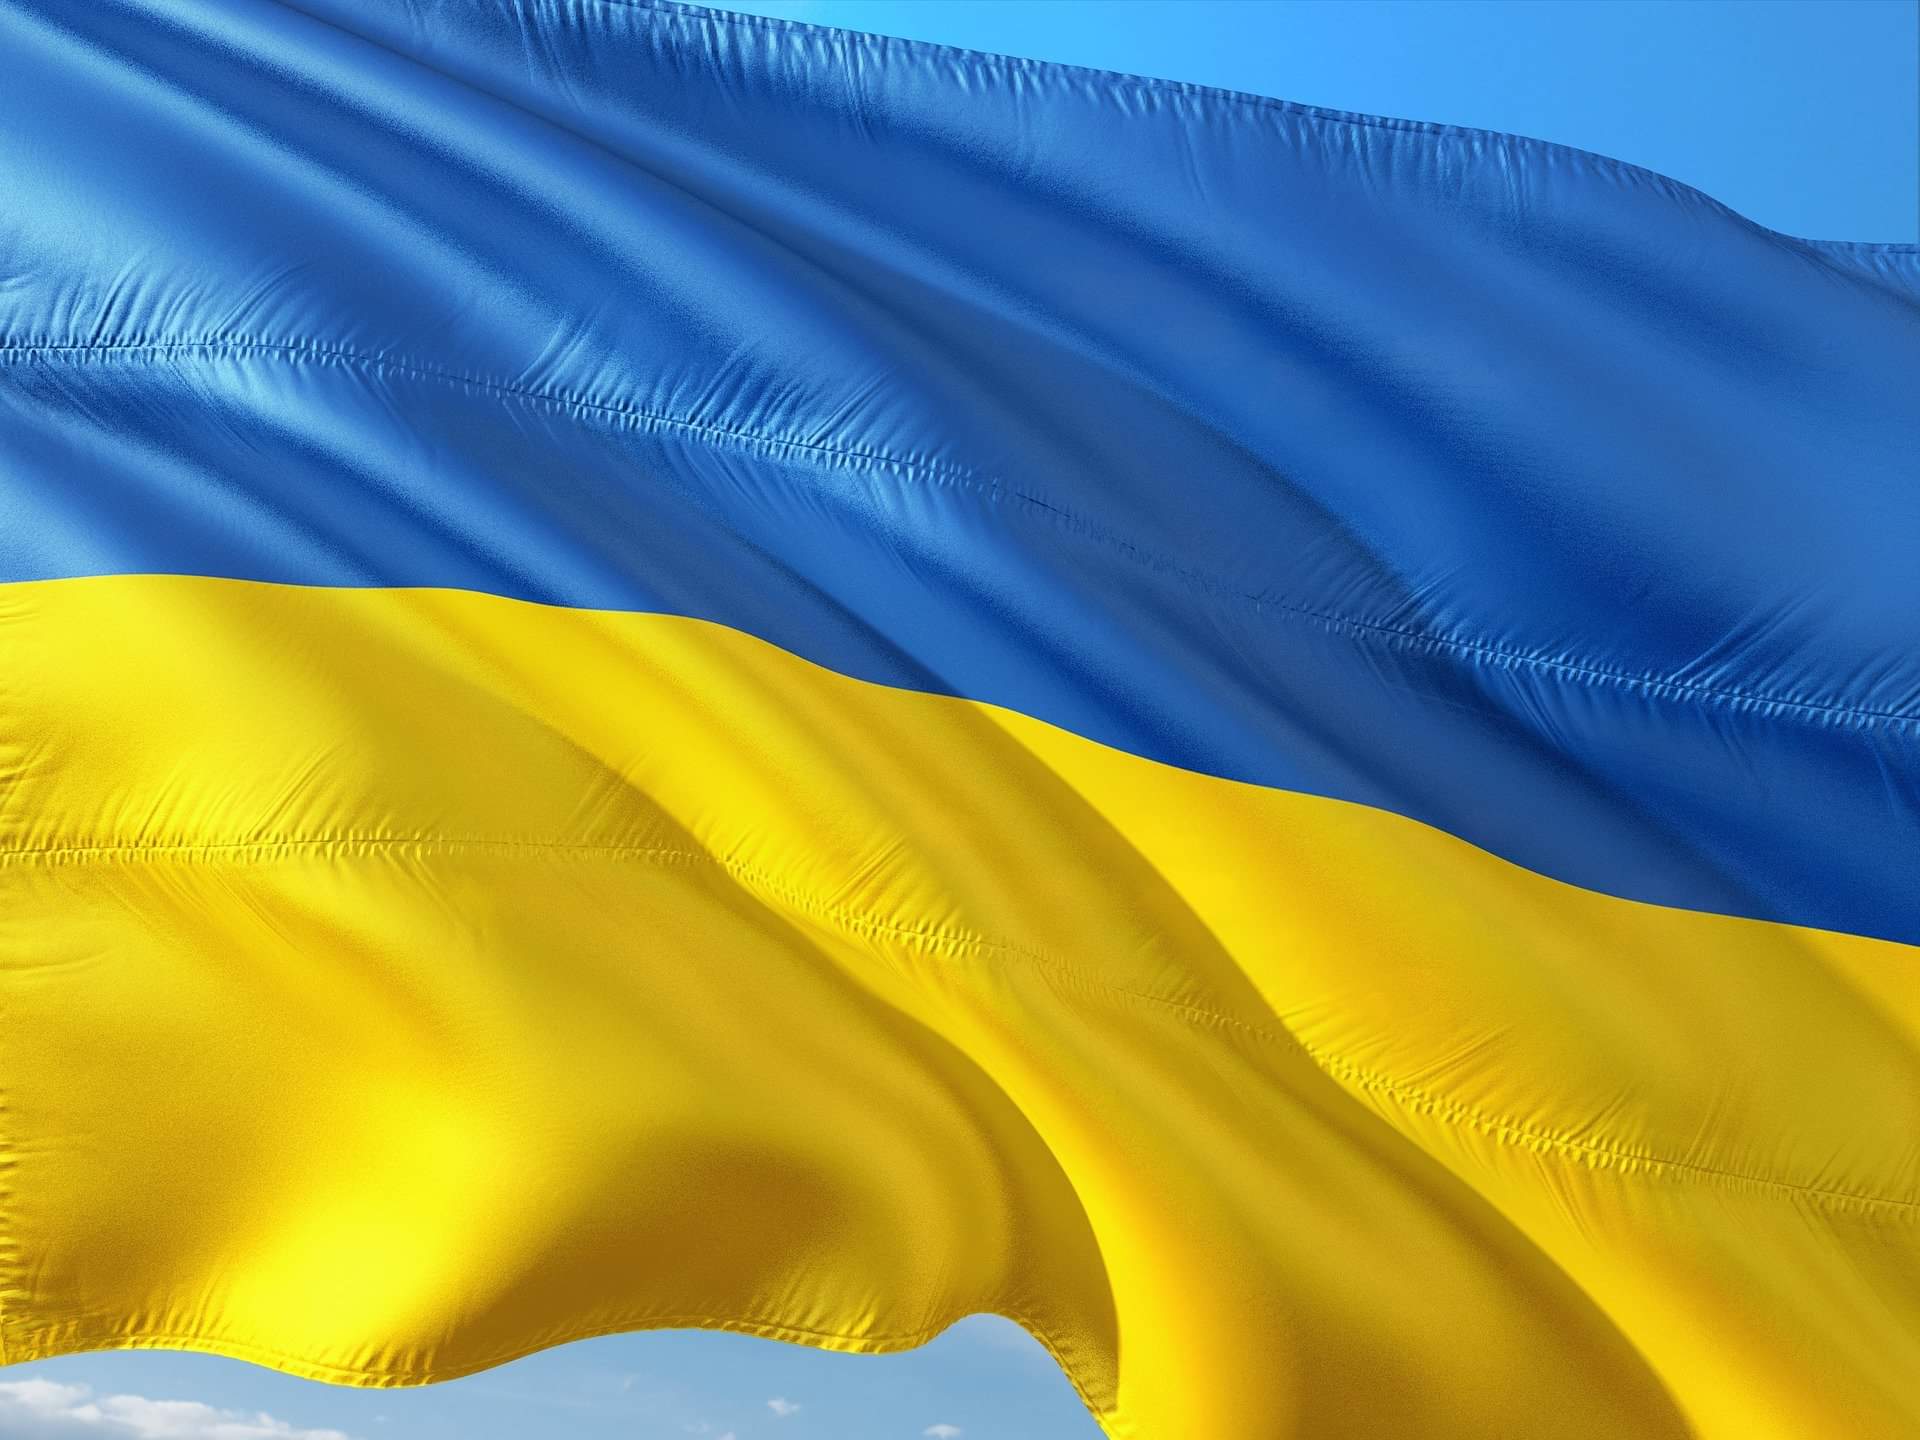 #SOLIDARNI Z UKRAINĄ